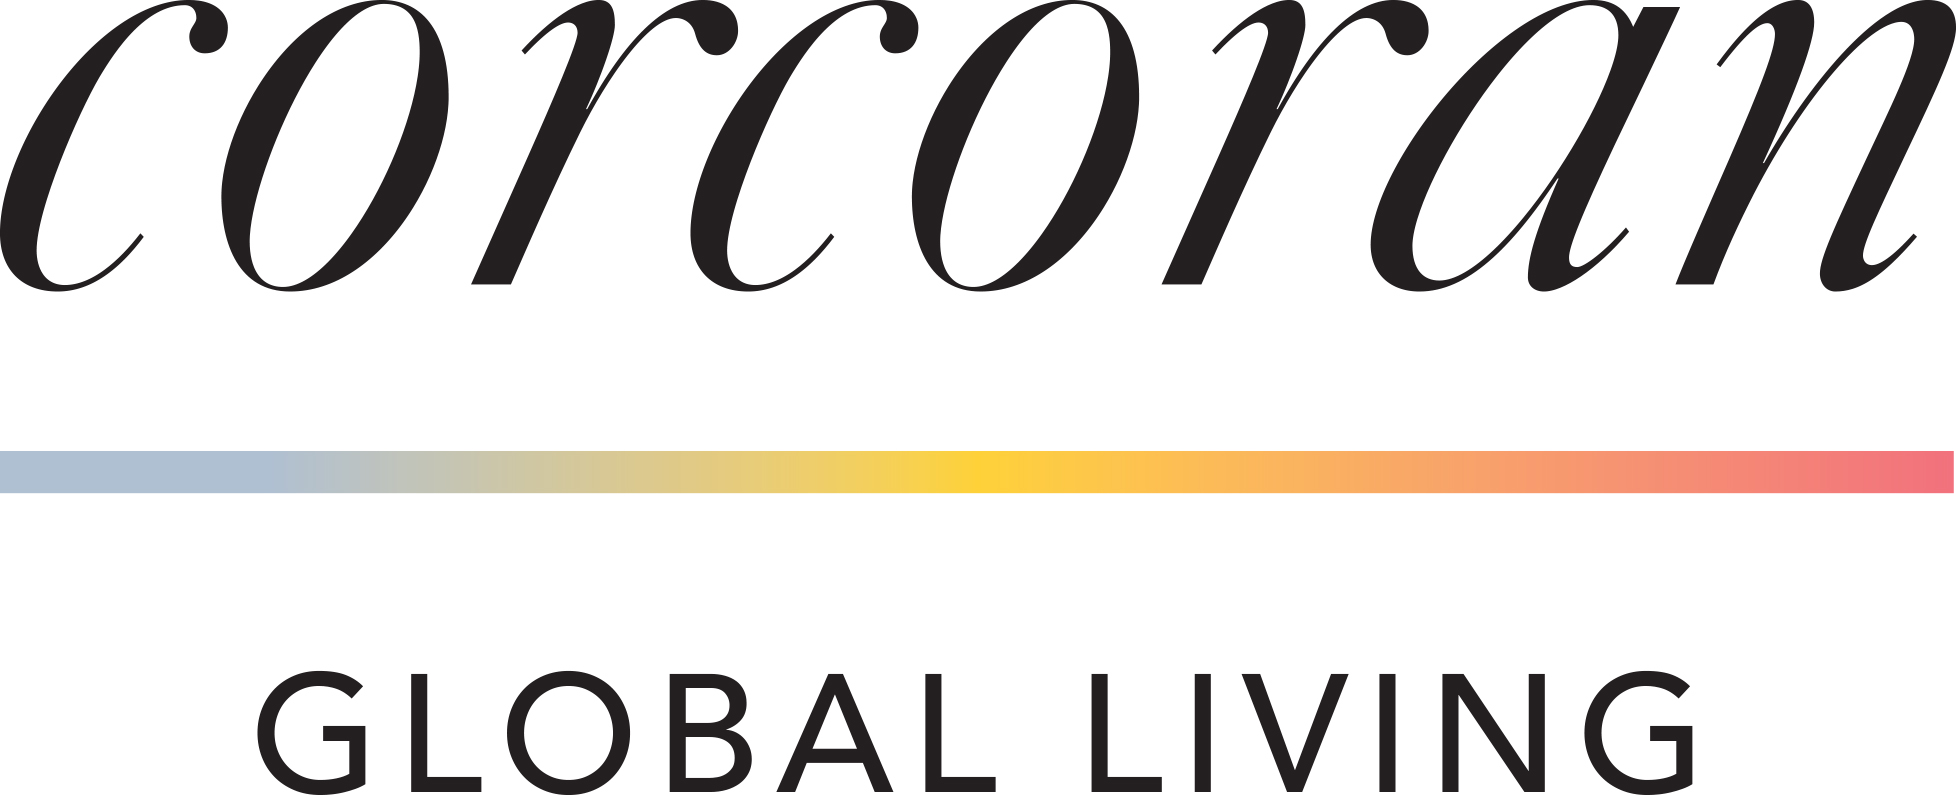 Corcoran Global Living | License #01203639